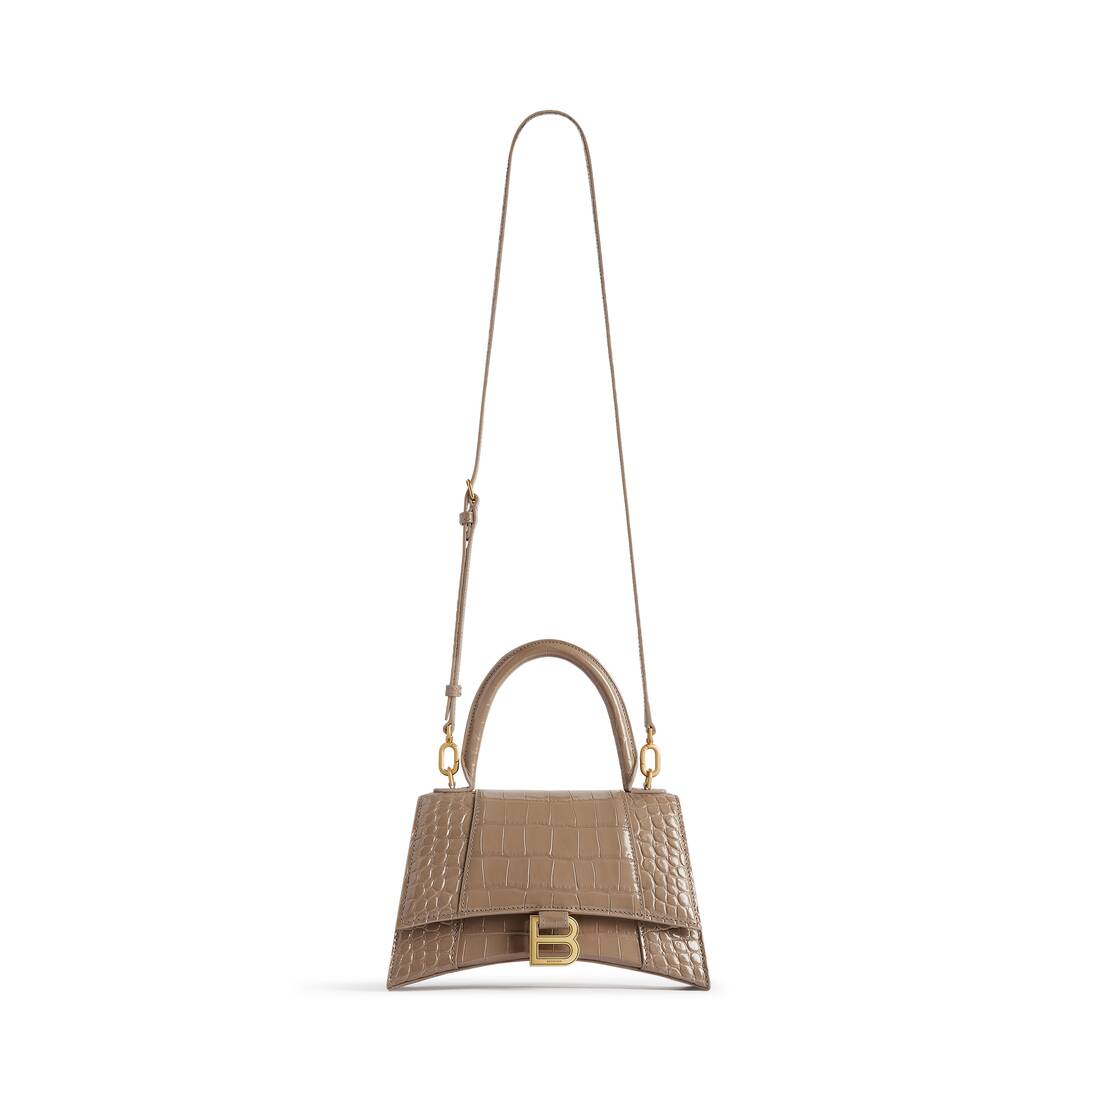 Balenciaga Women's Hourglass Small Handbag